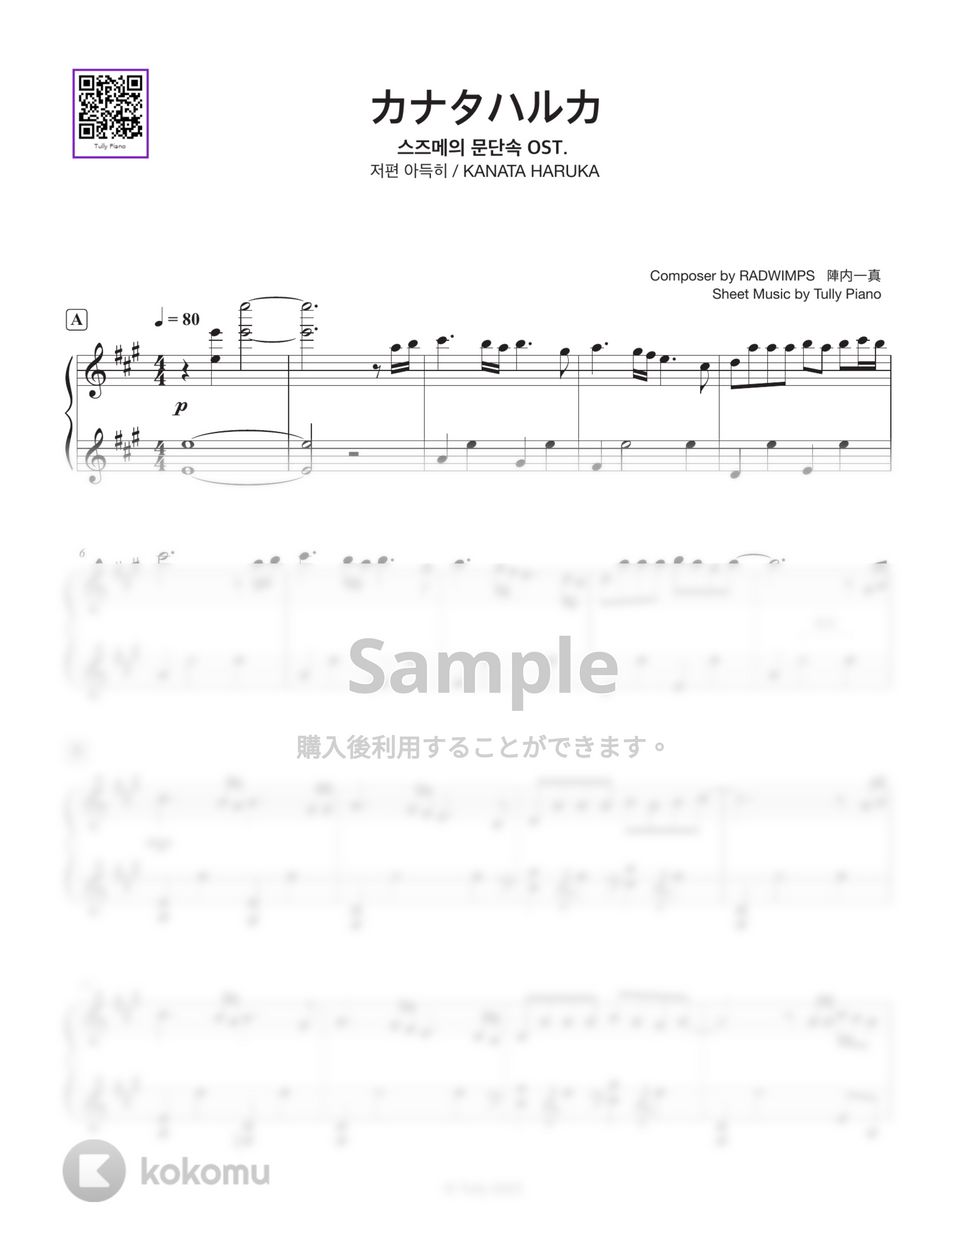 RADWIMPS - カナタハルカ (長いバージョンと短いバージョン) by Tully Piano